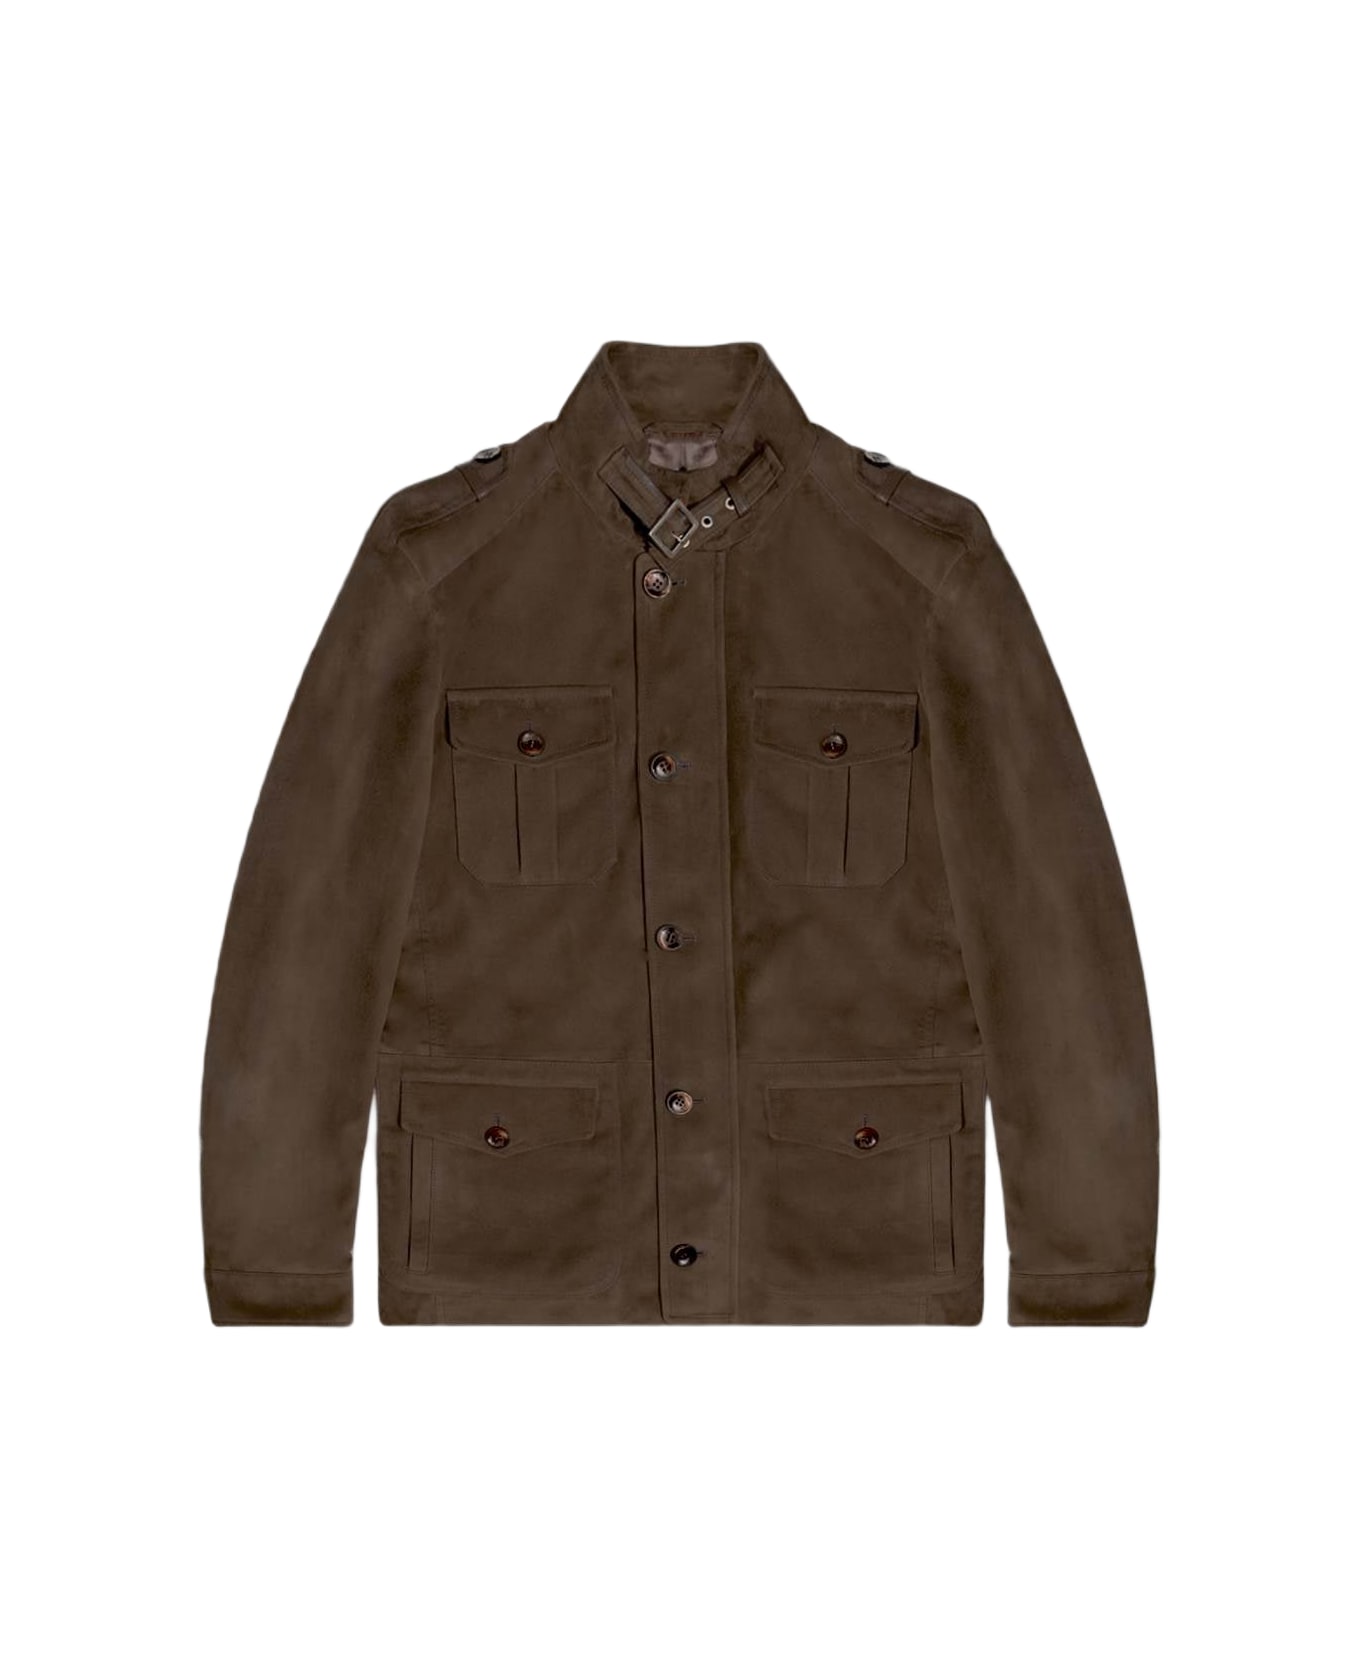 Larusmiani Devon Sahariana Jacket Leather Jacket - Brown レザージャケット